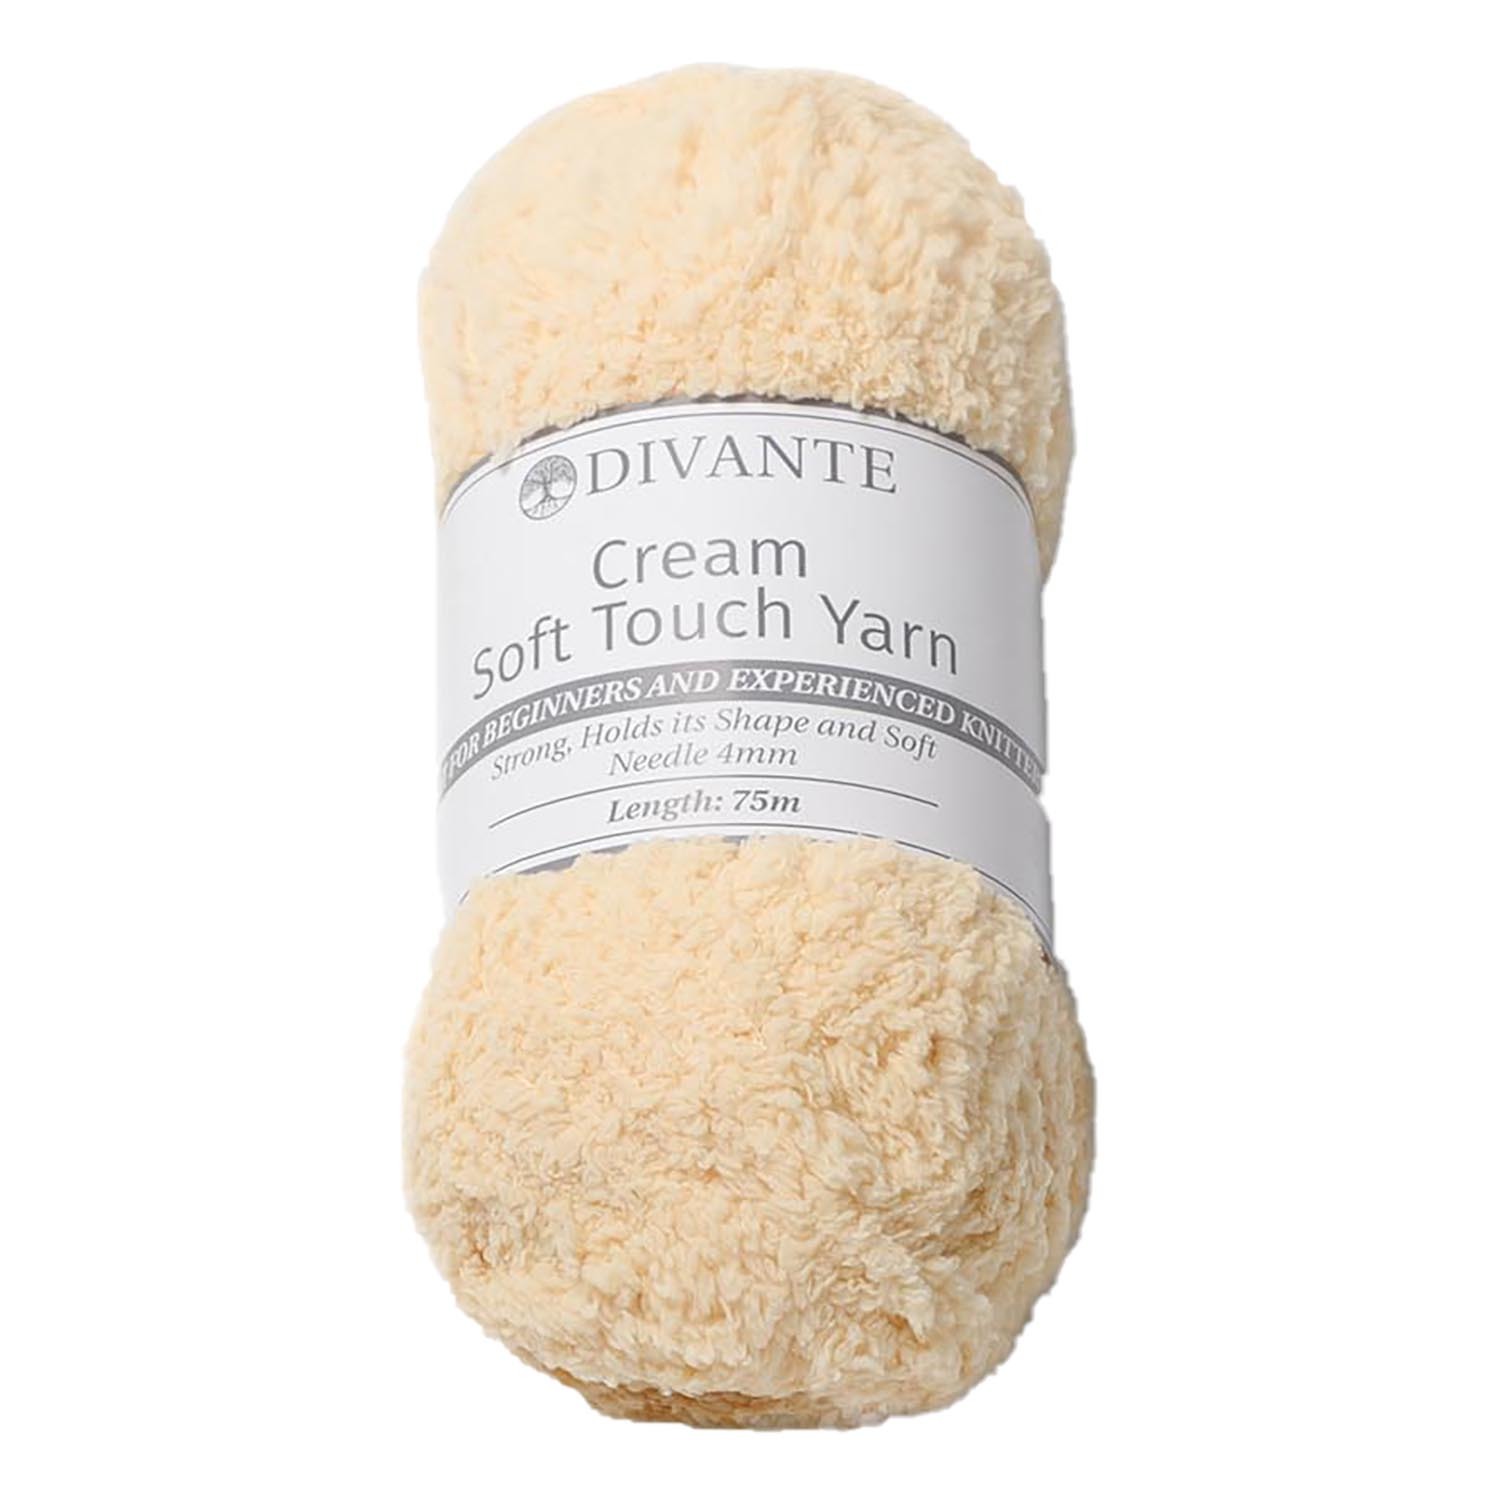 Divante Cream Soft Touch Yarn 50g Image